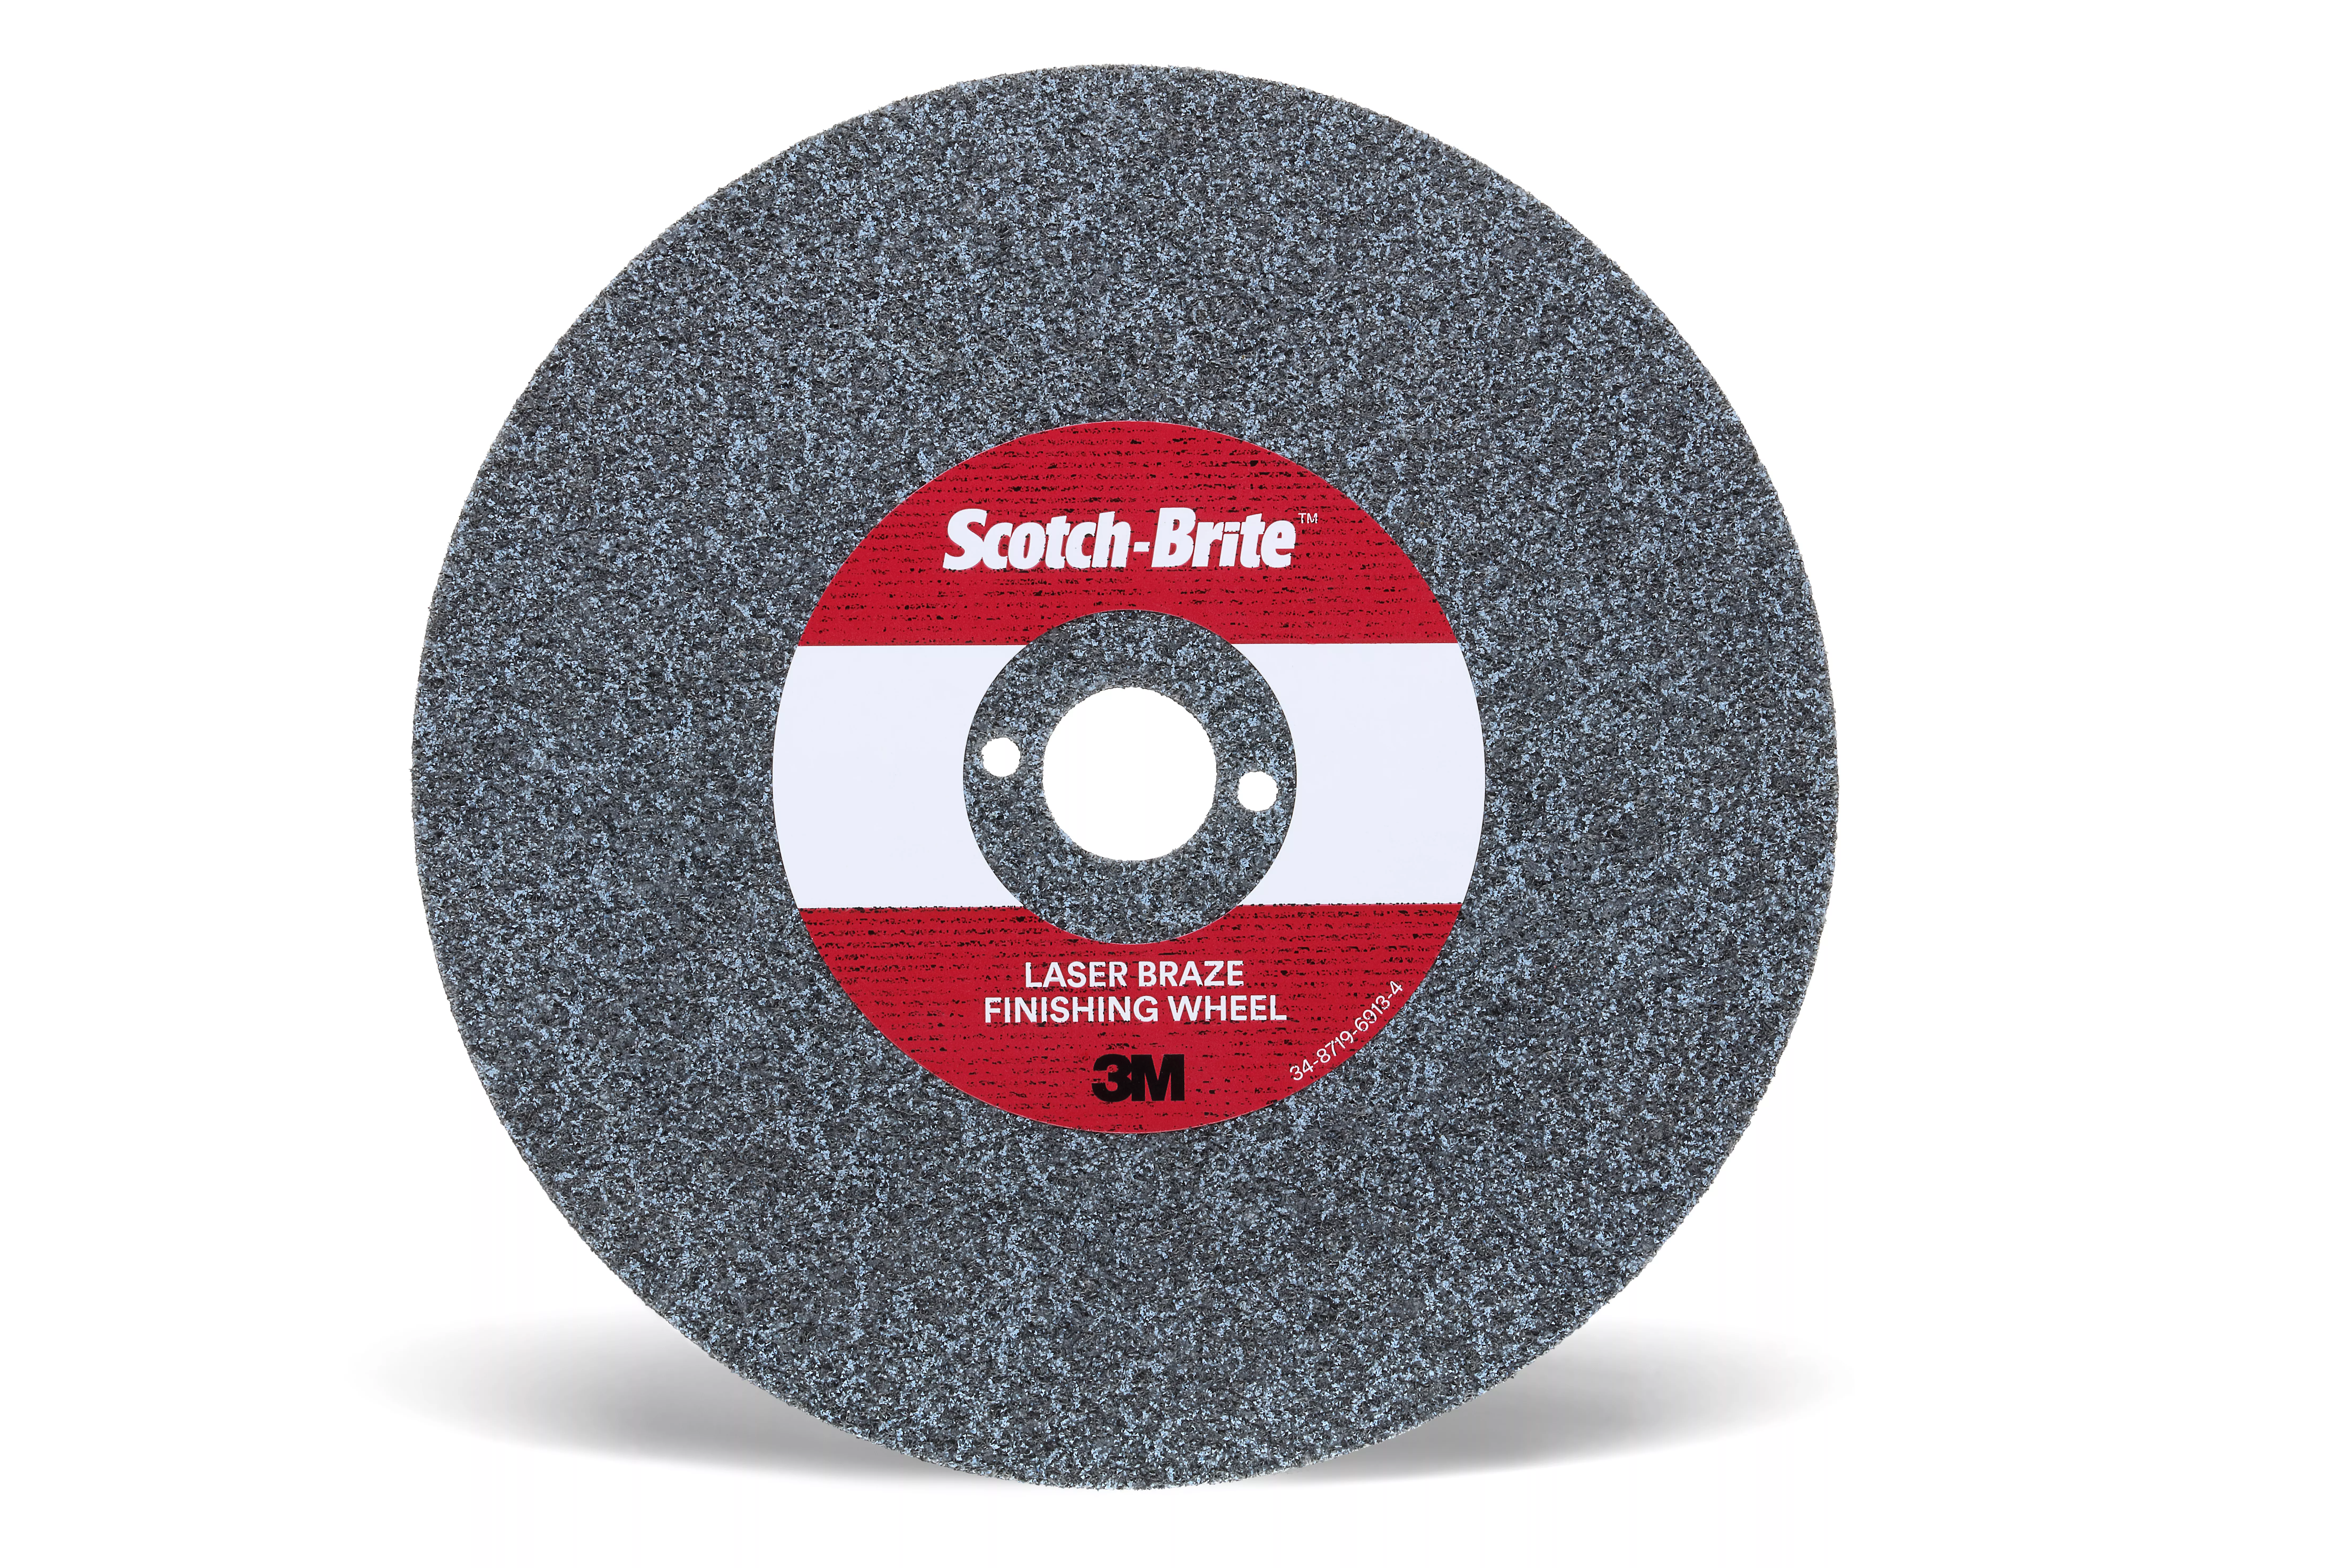 SKU 7100117397 | Scotch-Brite™ Laser Braze Finishing Wheel